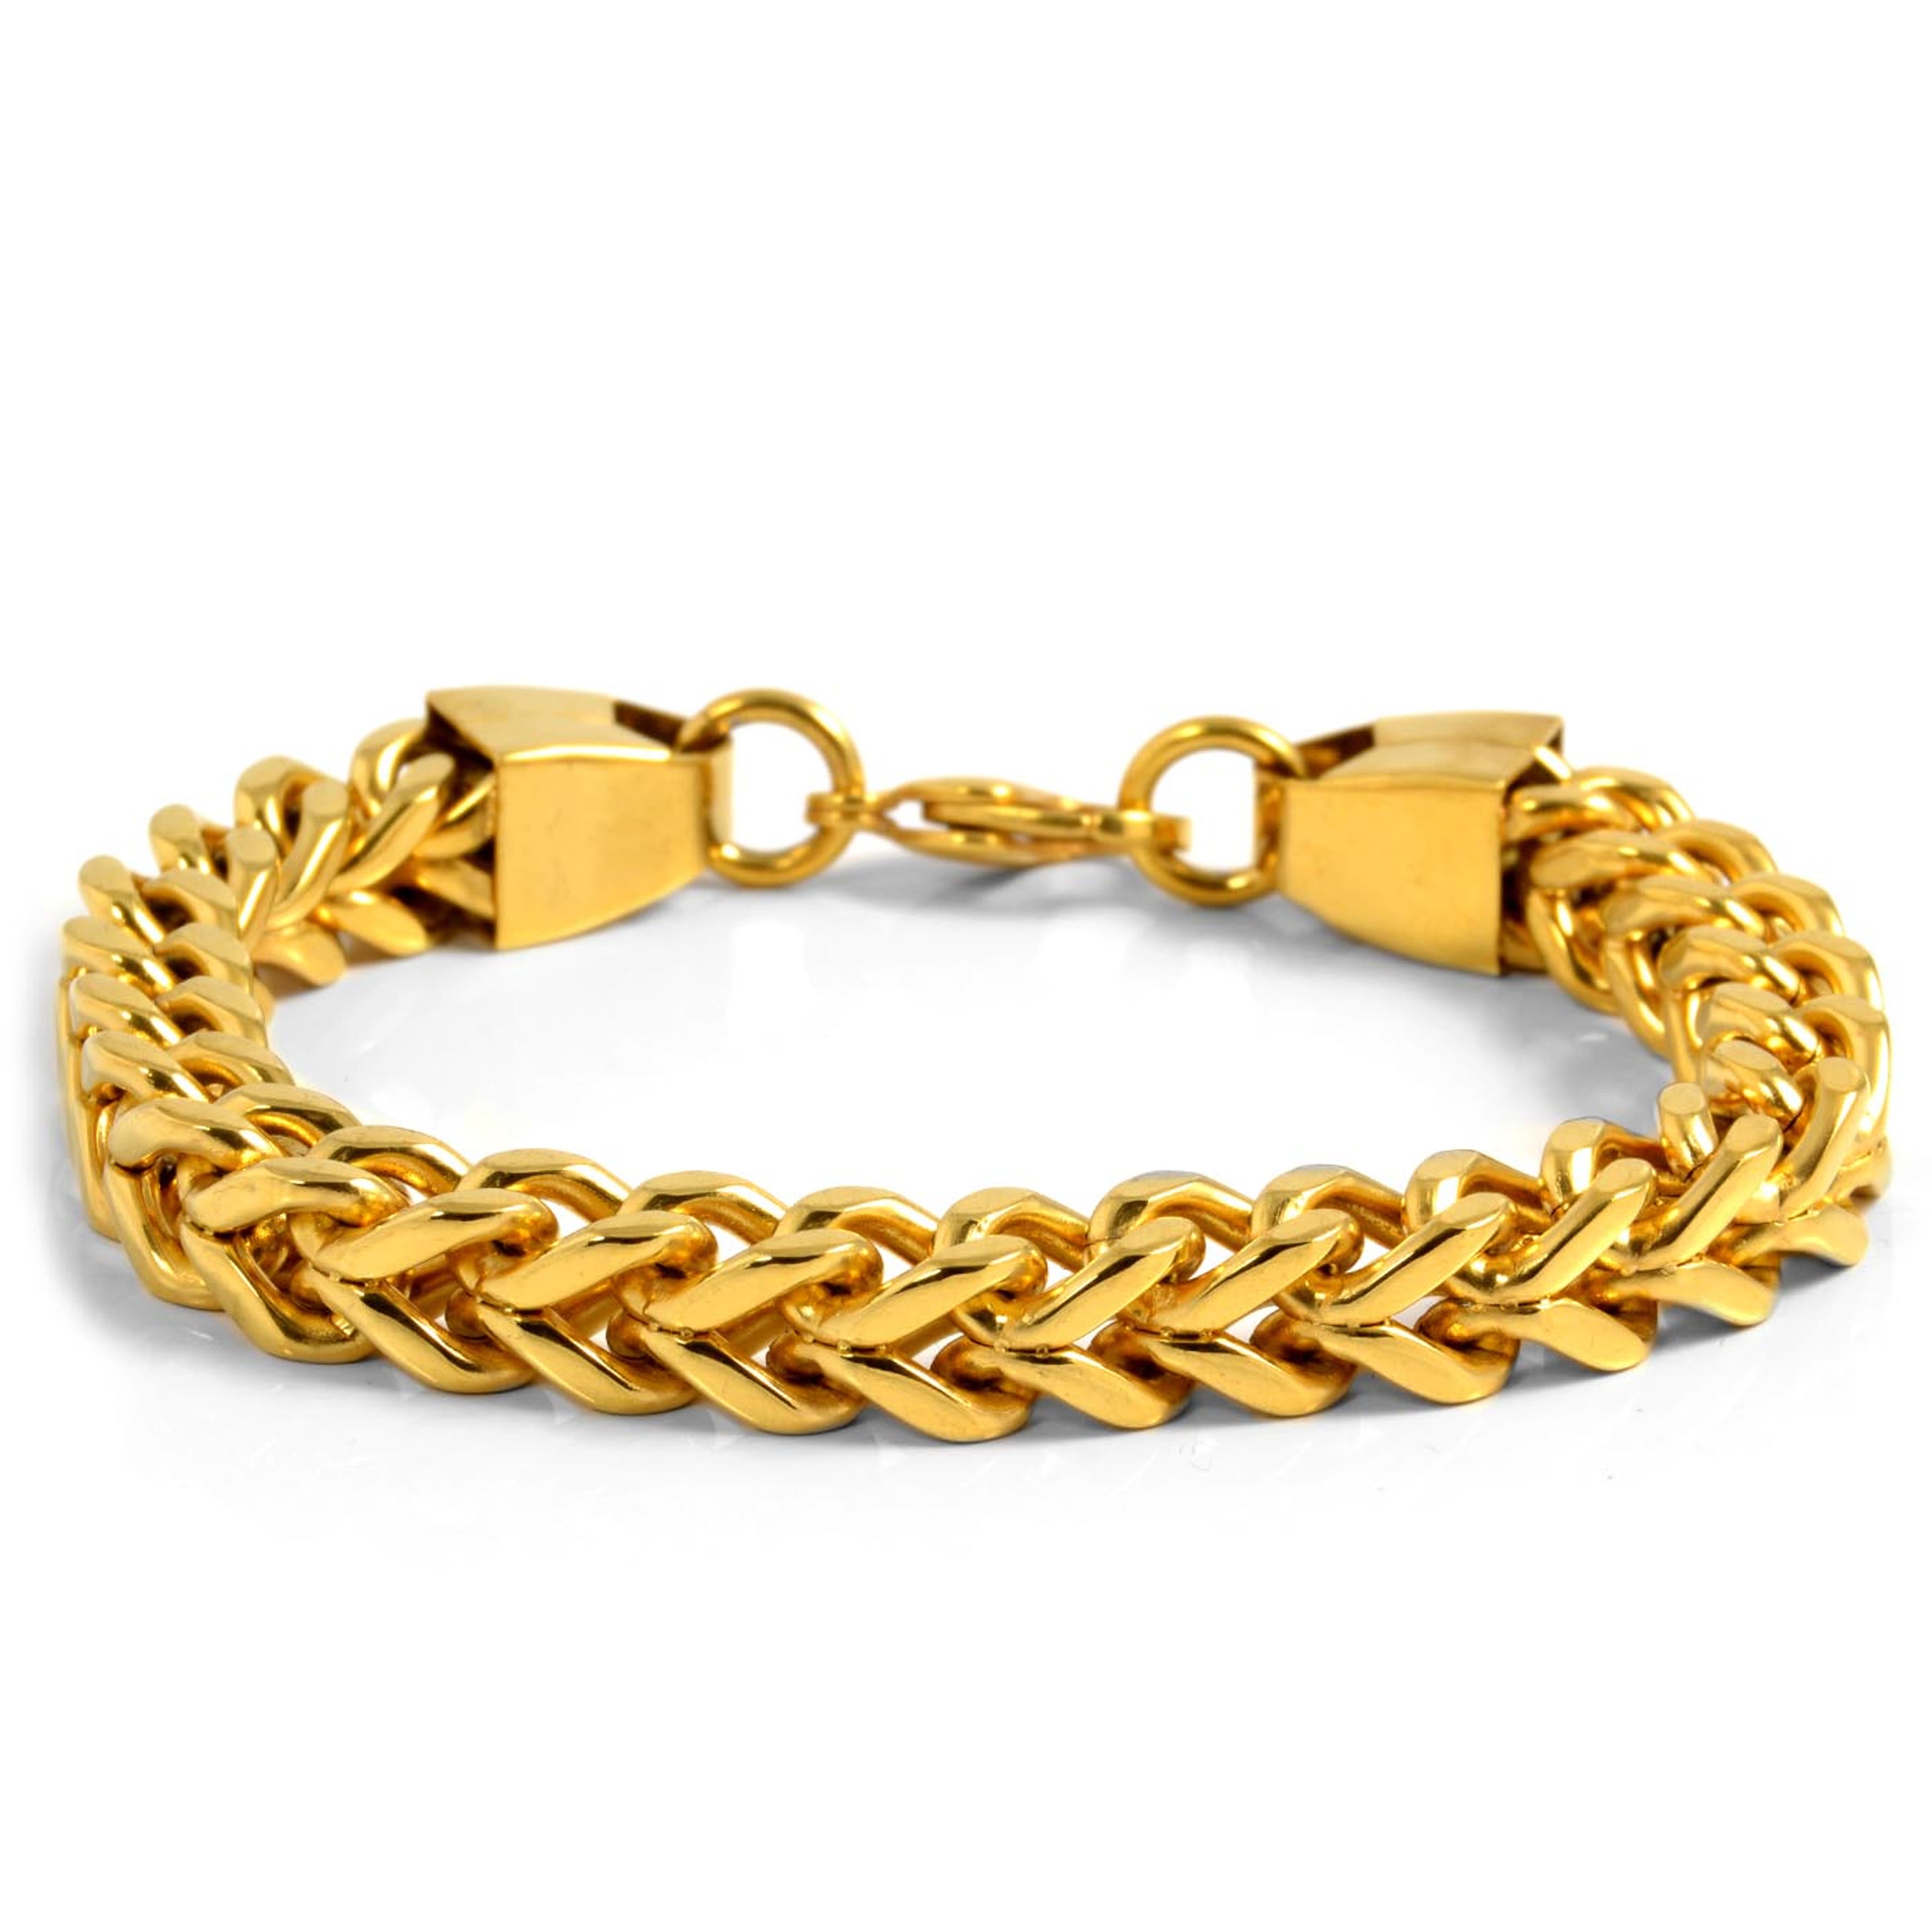 Gold-Tone Surgical Steel Bracelet